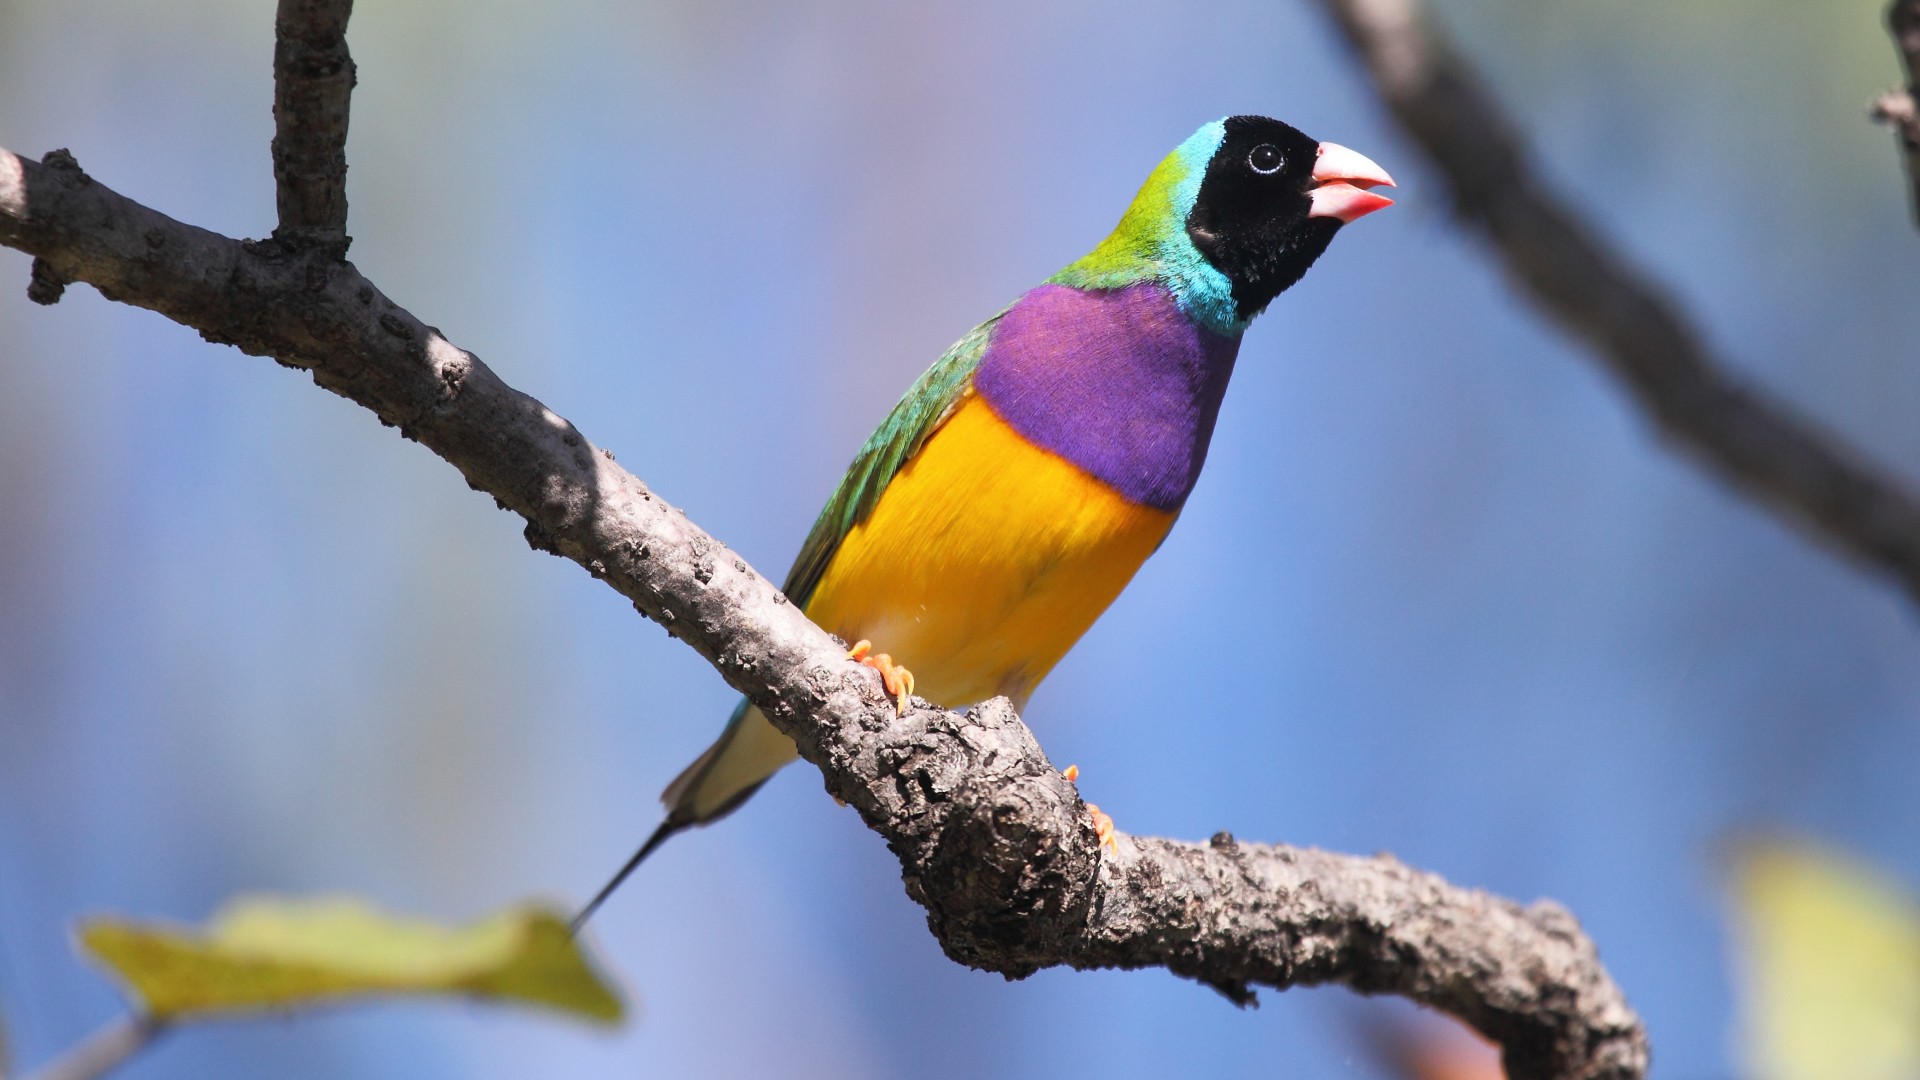 Gouldian finch, bird, Australia, colorful, branch, sky, blue, yellow, nature, animal (horizontal)